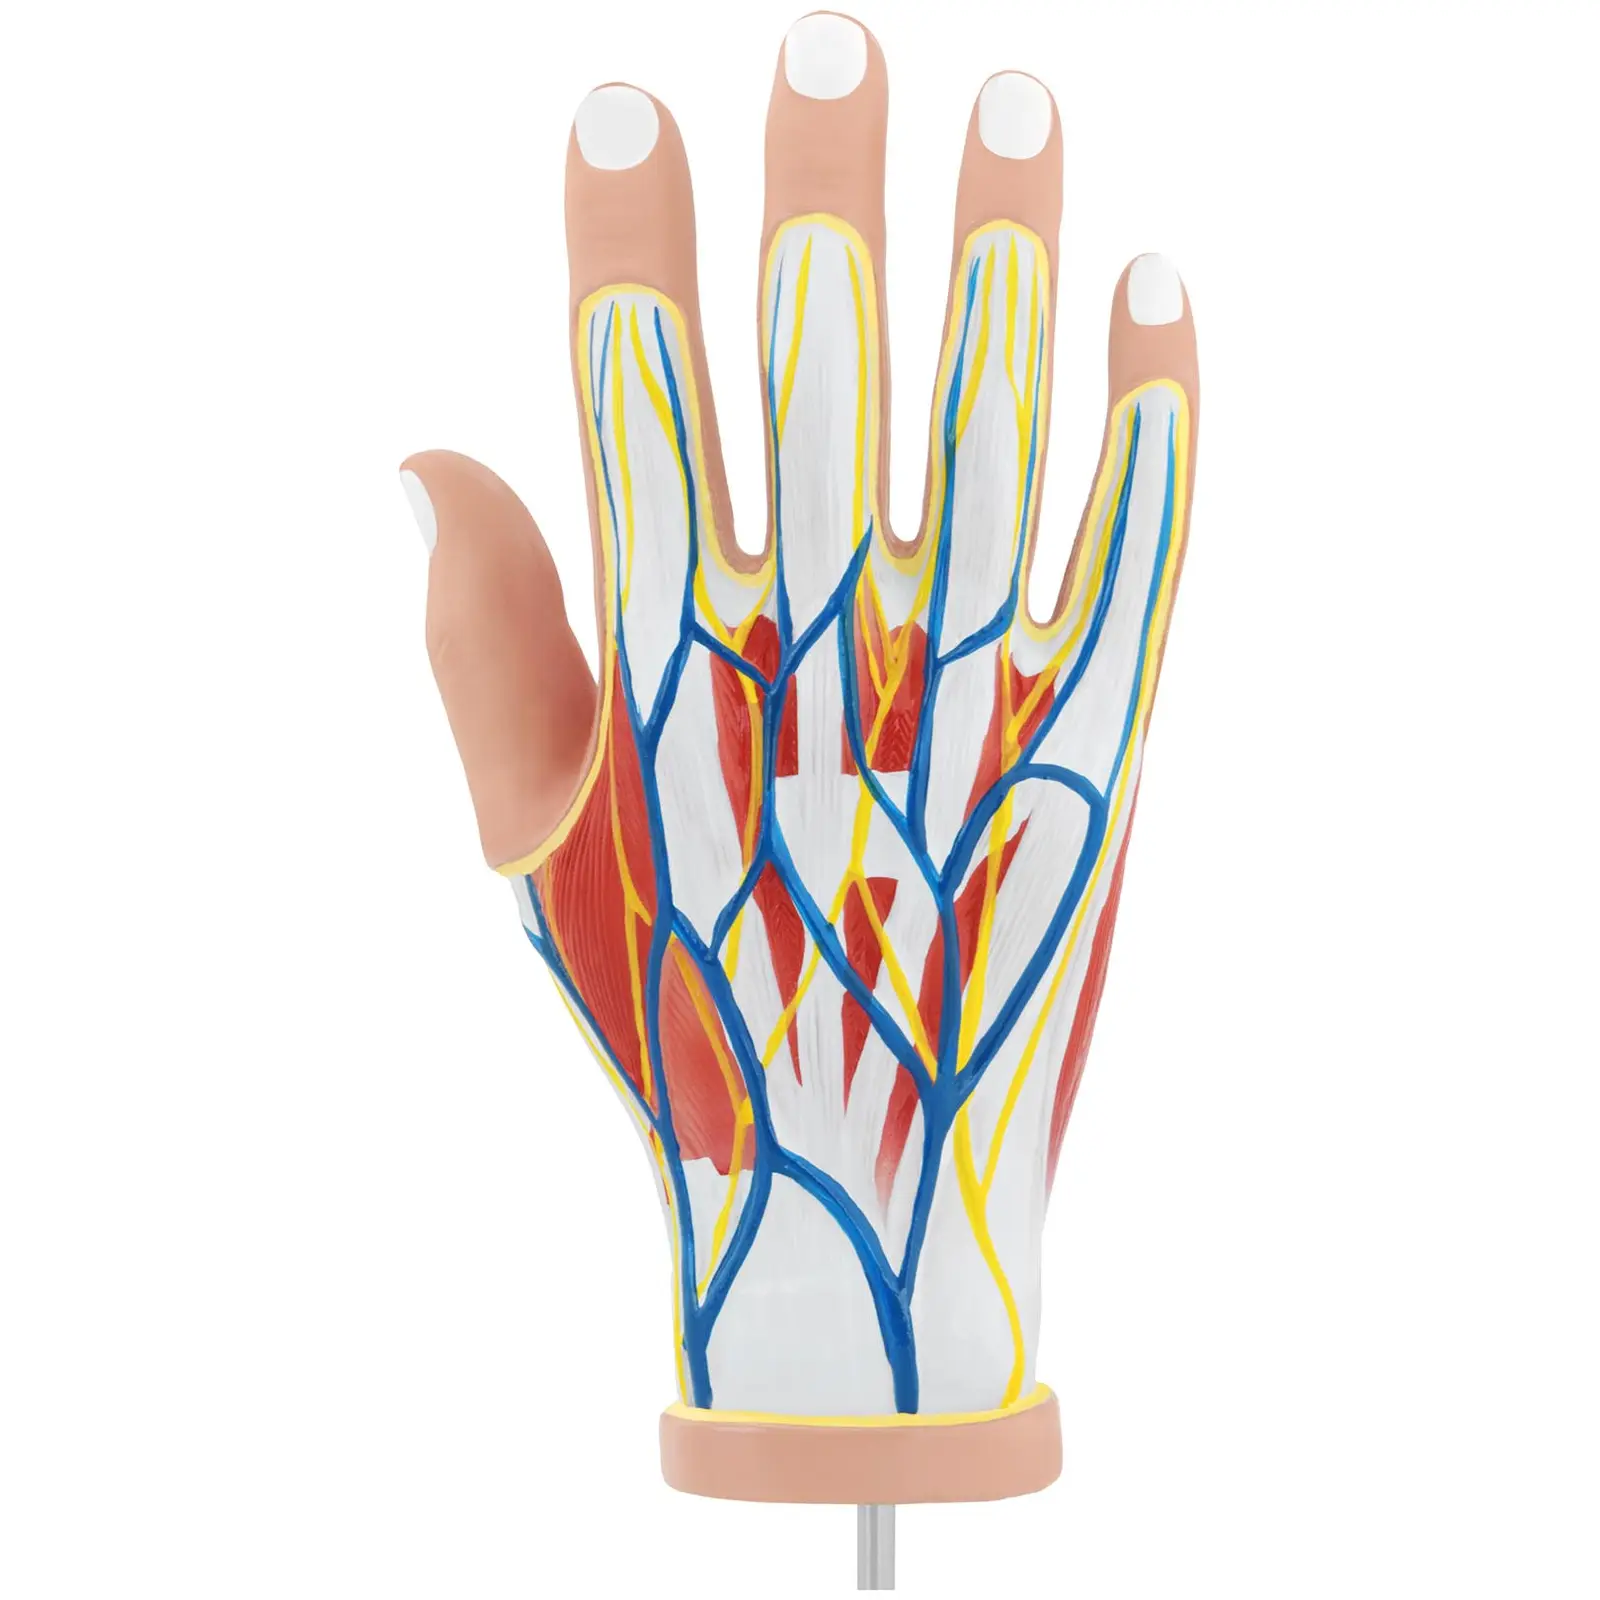 Modelo anatómico - mano - cuatro piezas - tamaño natural - degeneración muscular